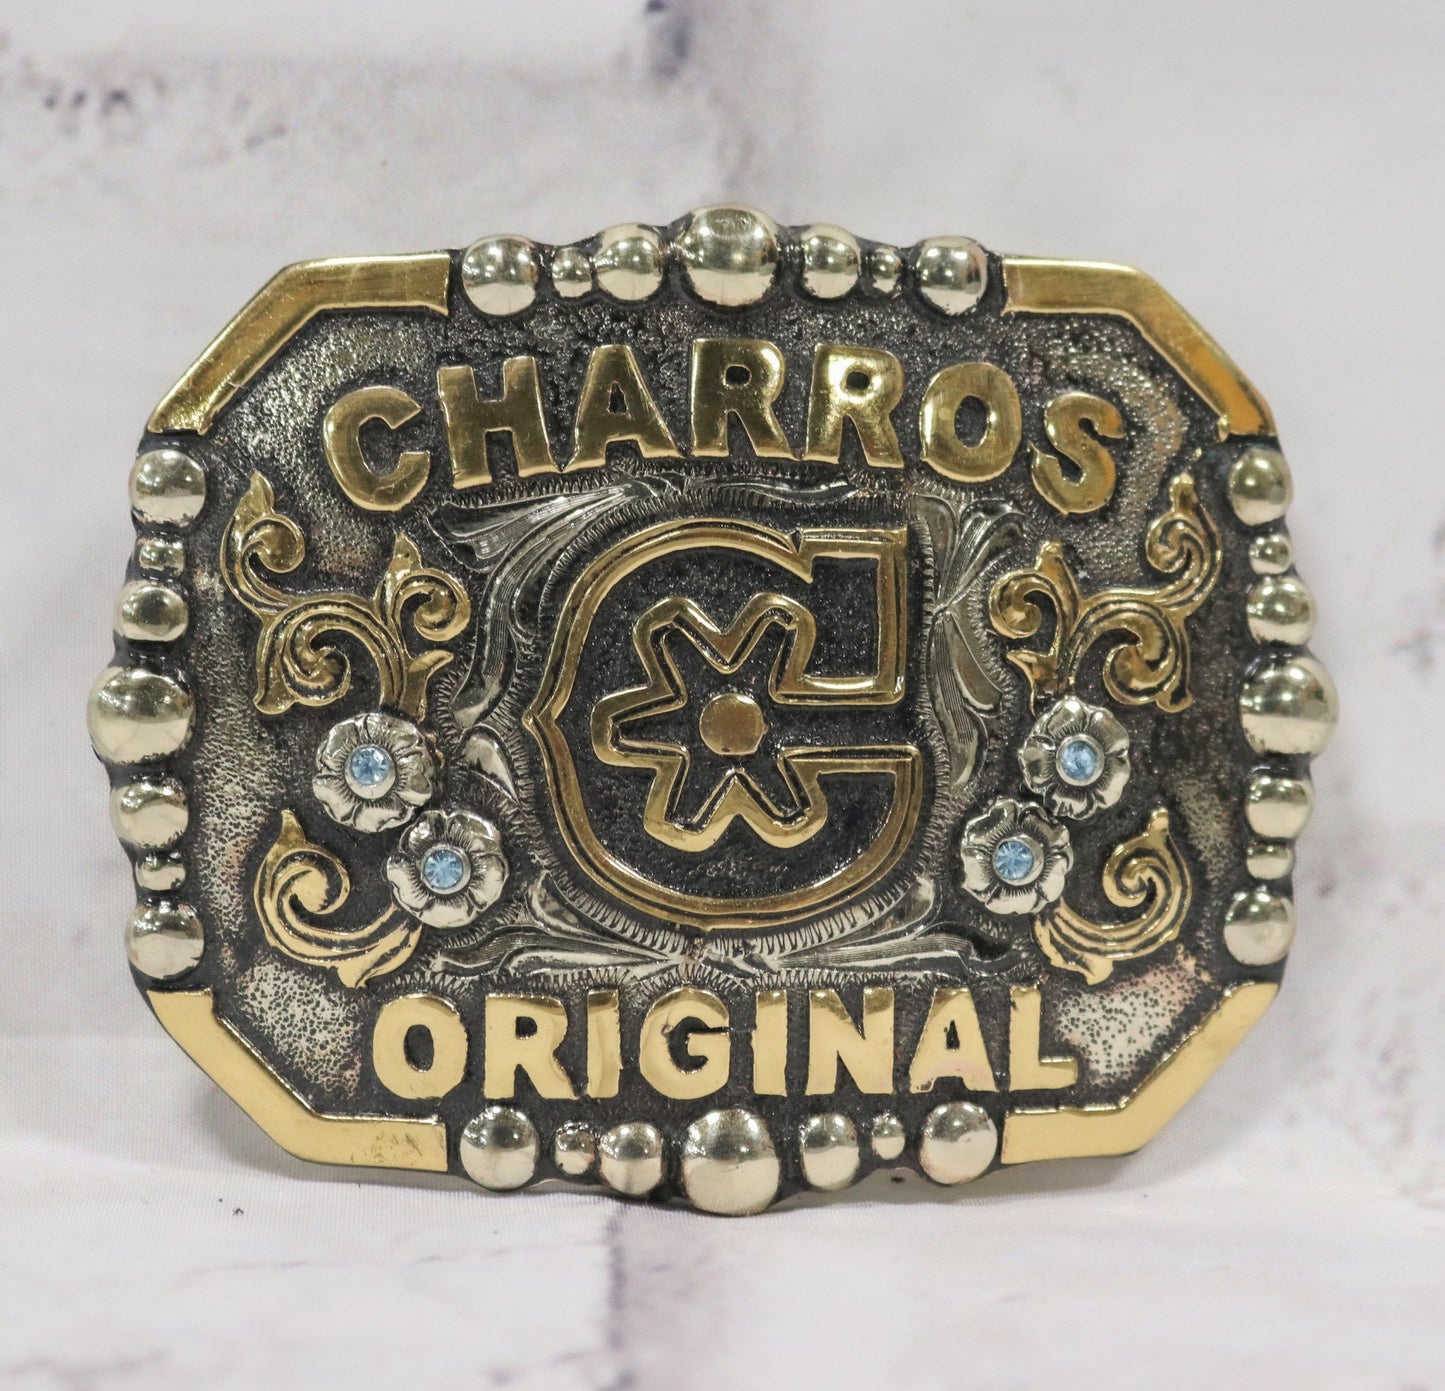 Charros Original Hebilla Fina “C”